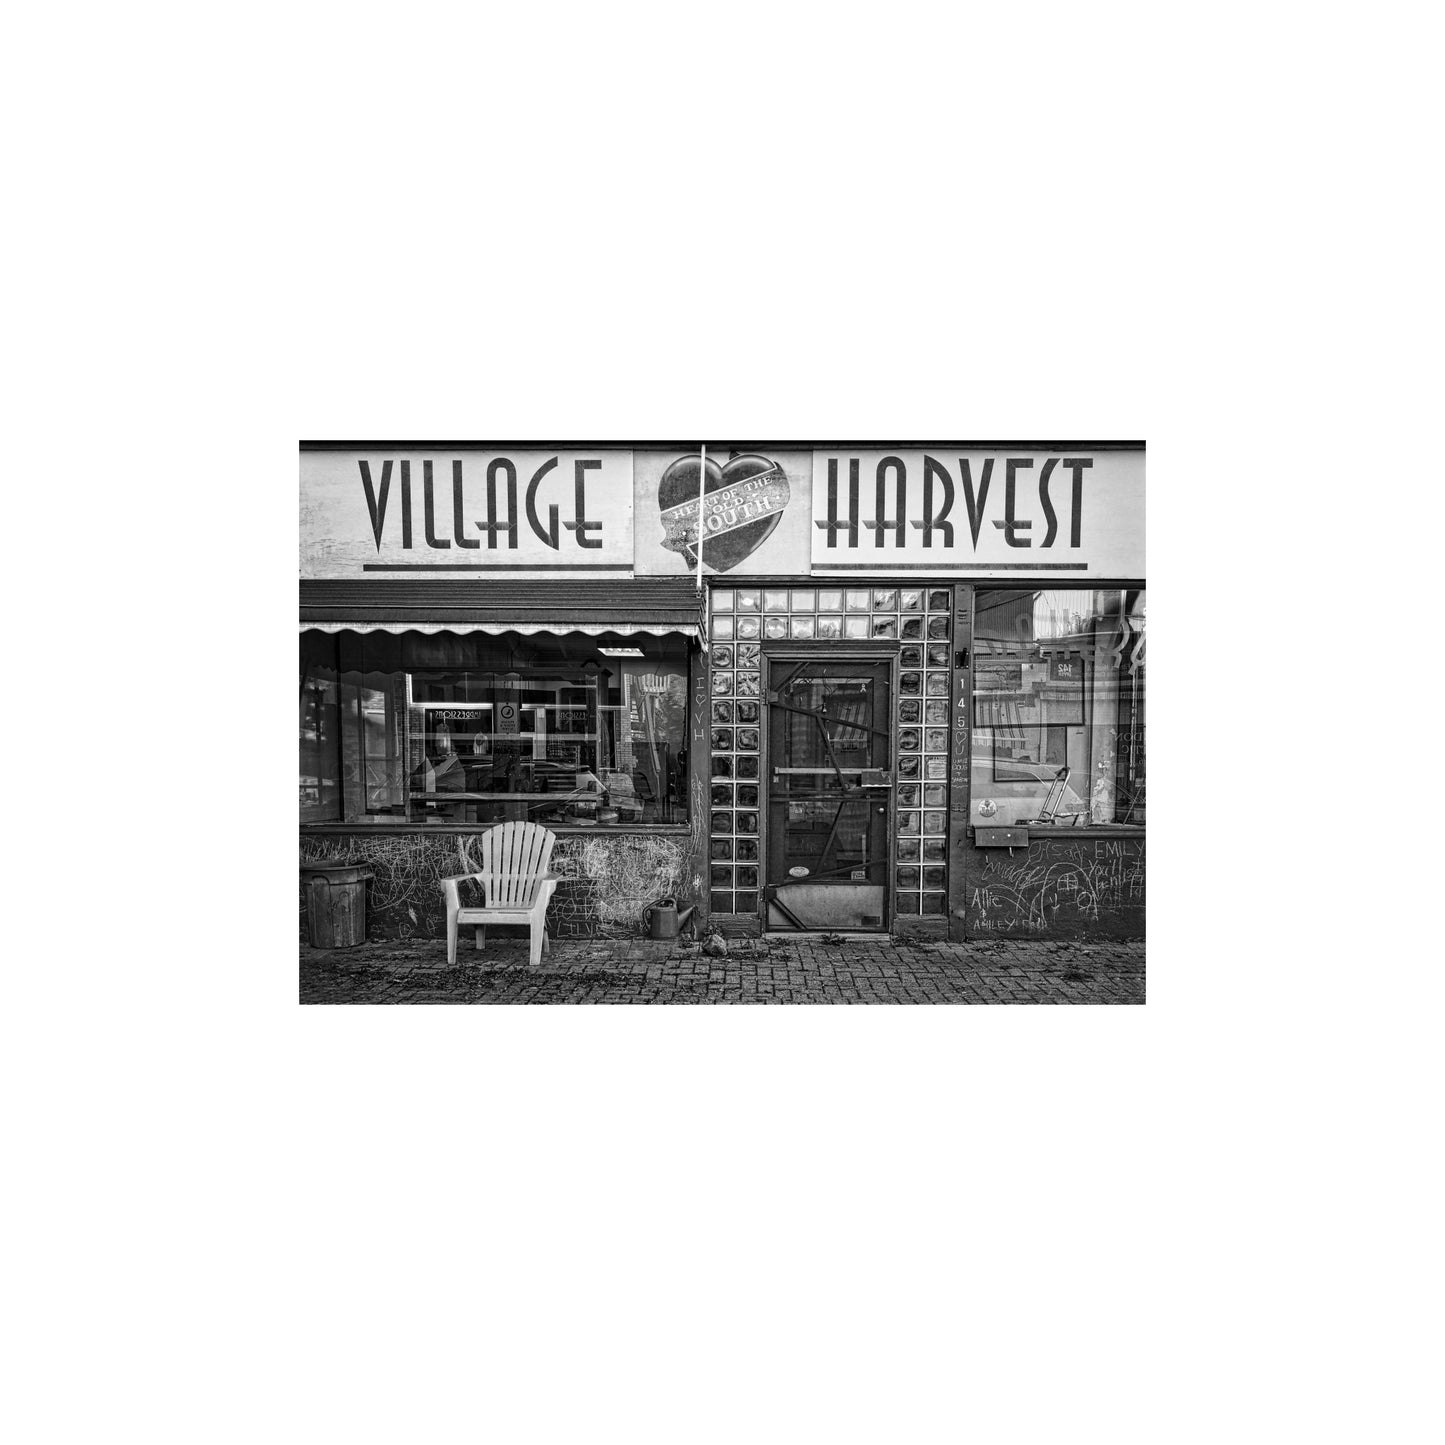 Village Harvest Bakery by Paul Lambert